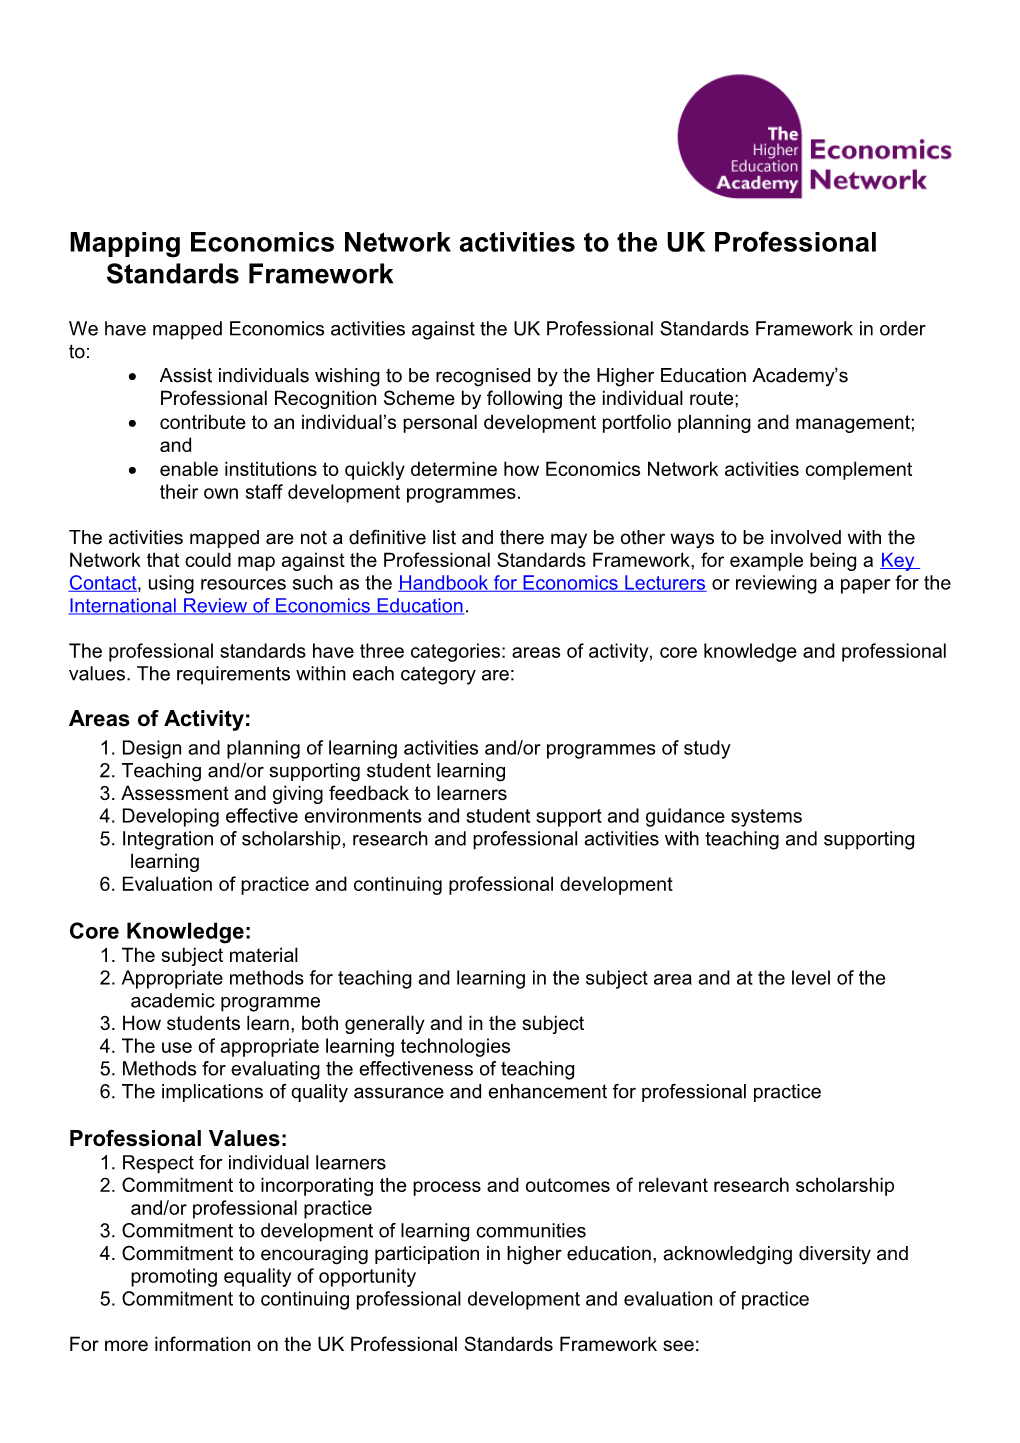 Mapping Economics Netork Activities to the UK Professional Standards Framework